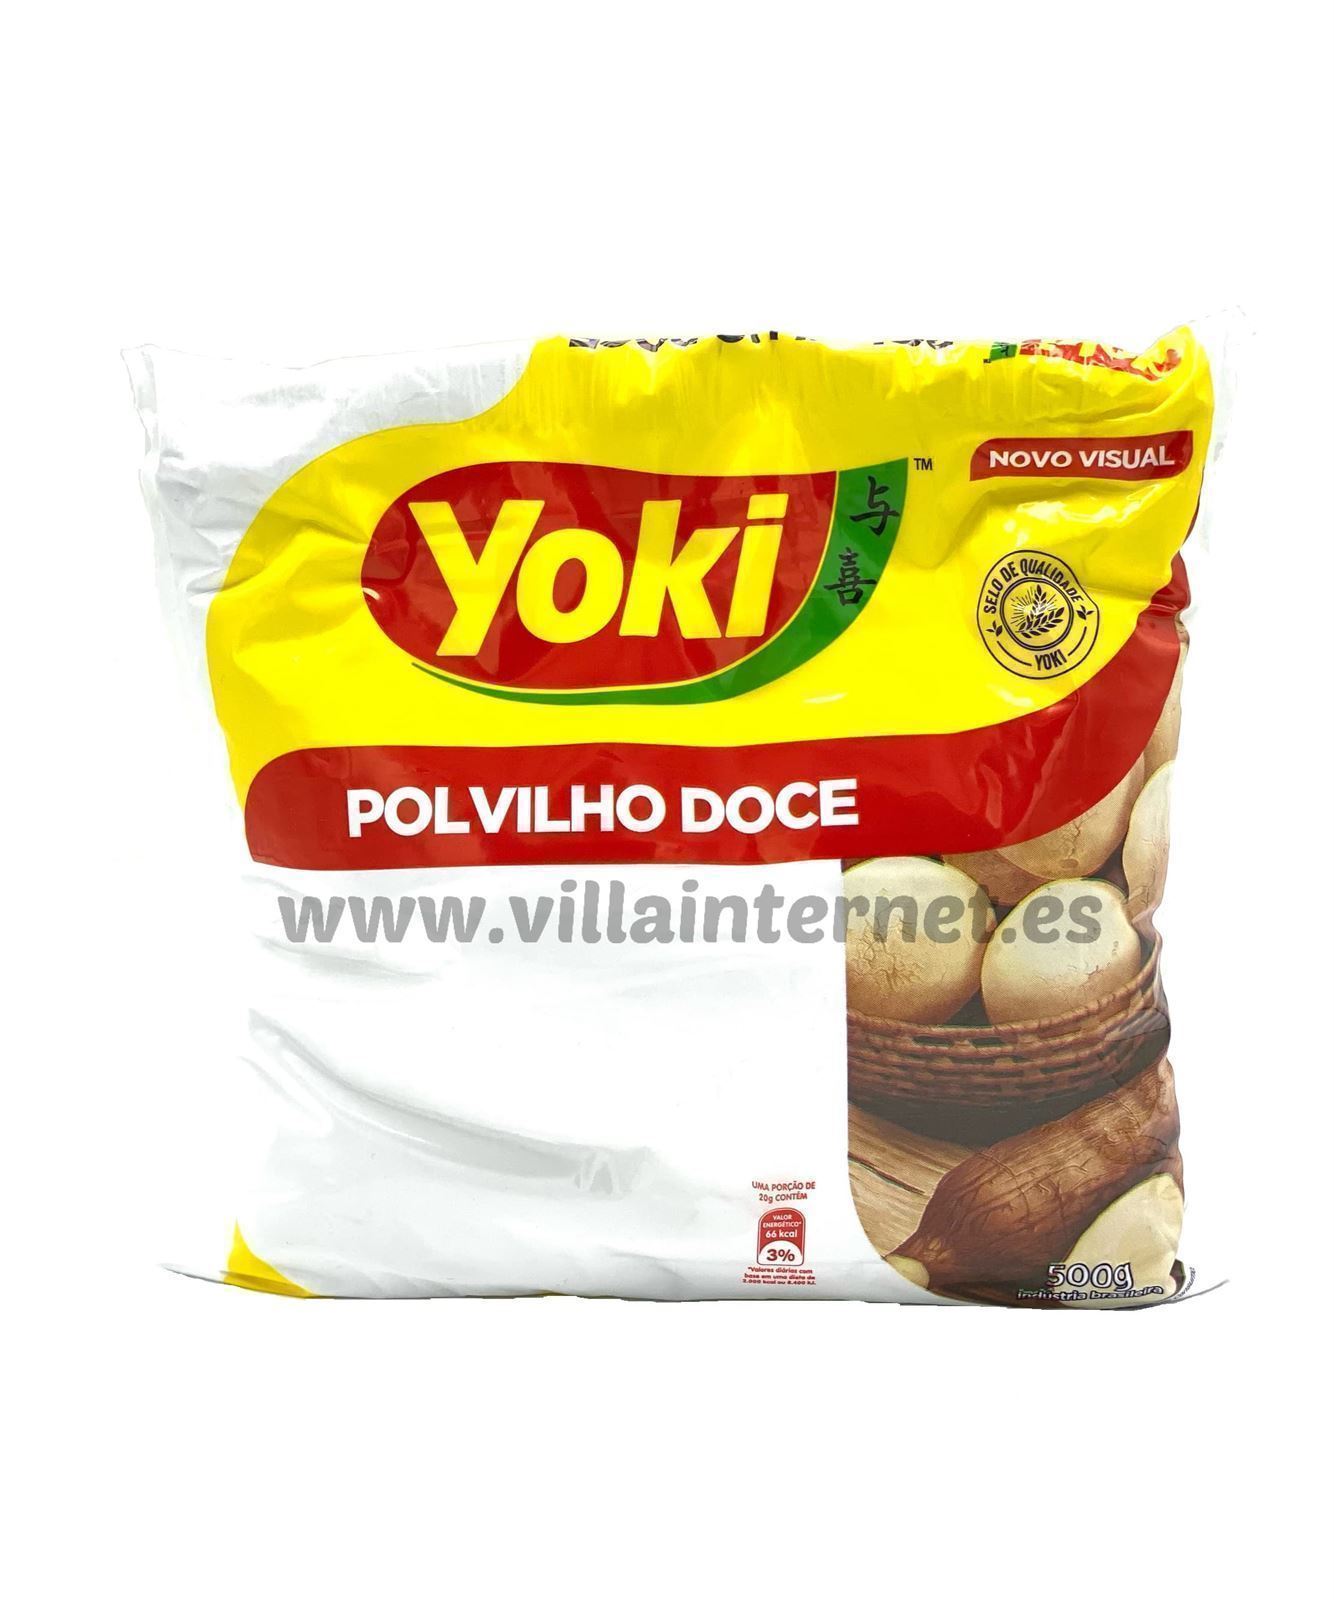 Polvilho doce Yoki 500g - Imagen 1